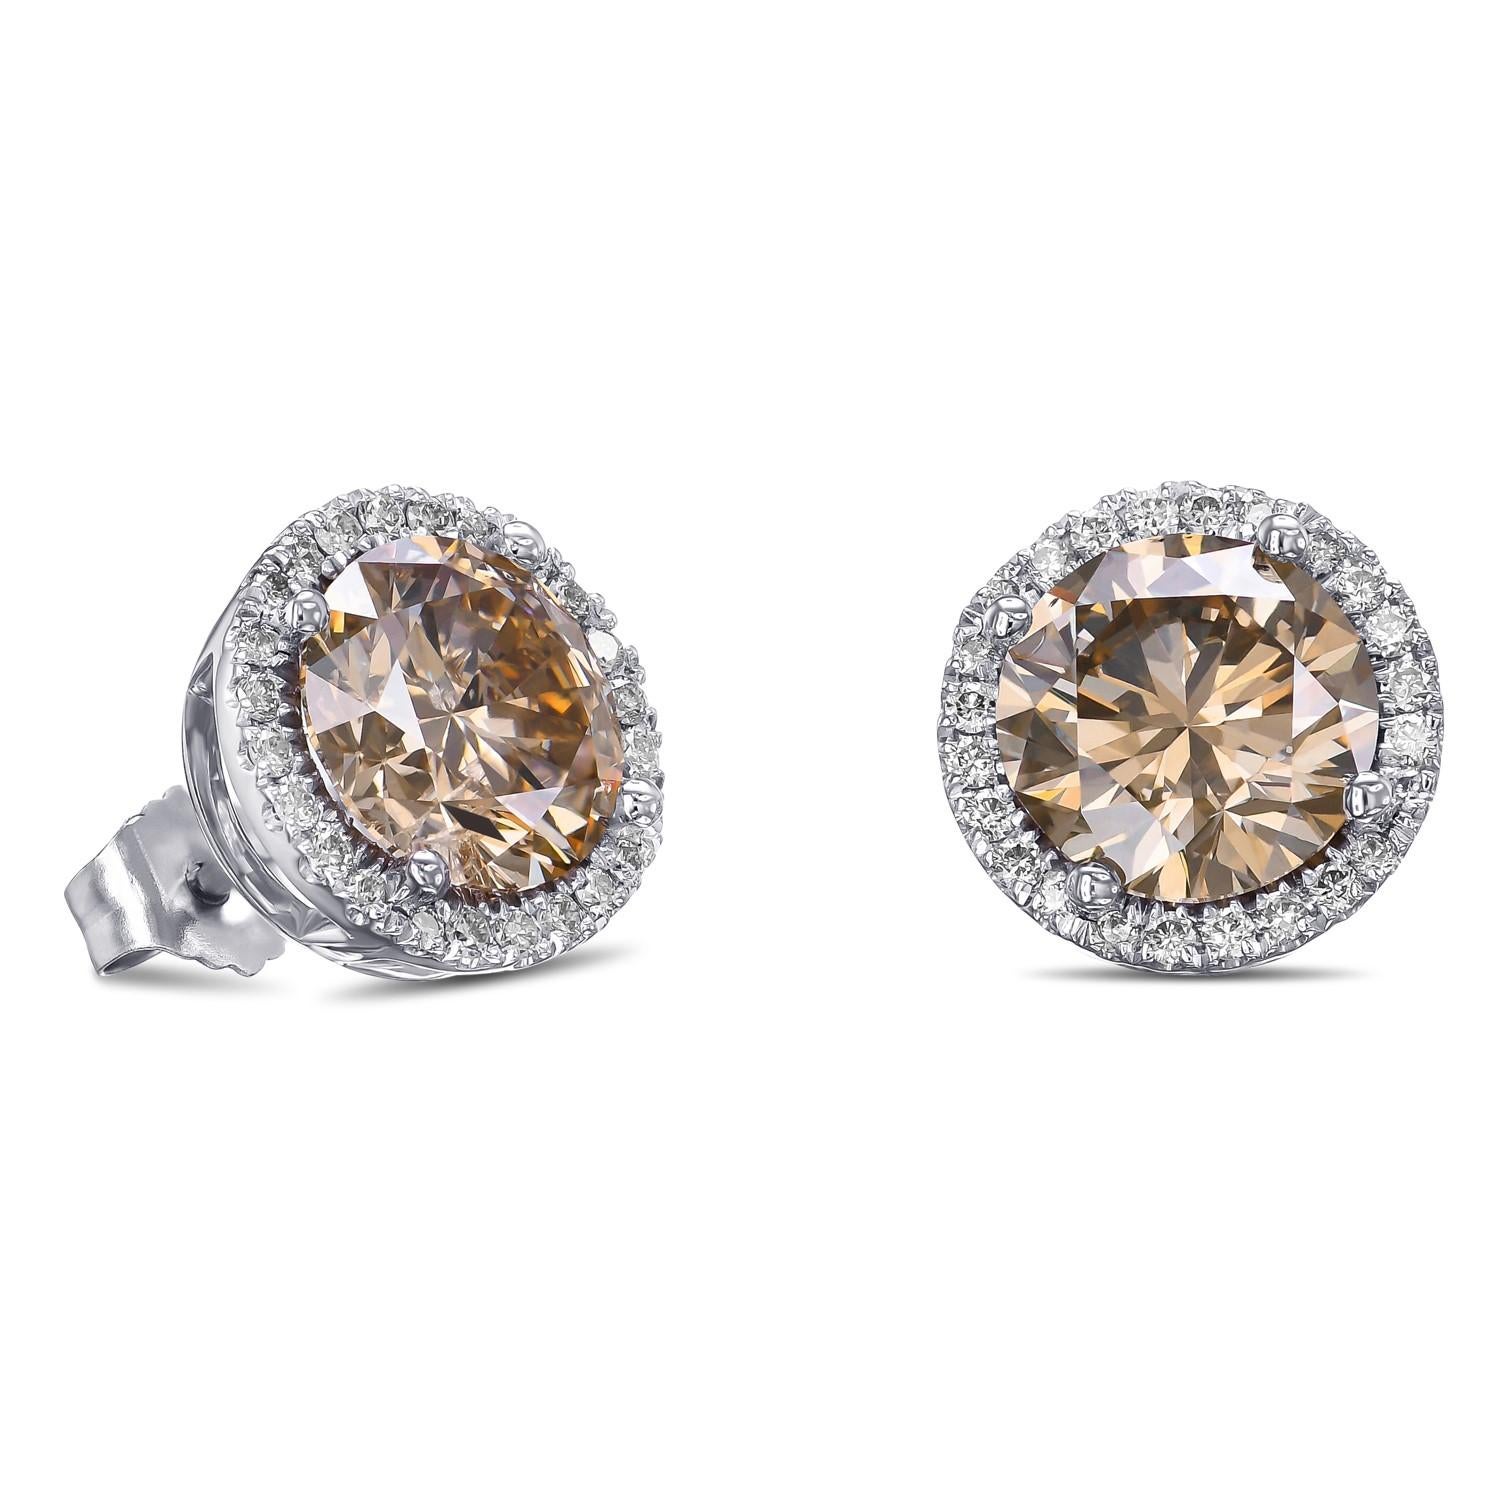 Round Cut NO RESERVE - 4.80cttw Fancy Diamonds, 18 Karat White Gold Halo Earrings